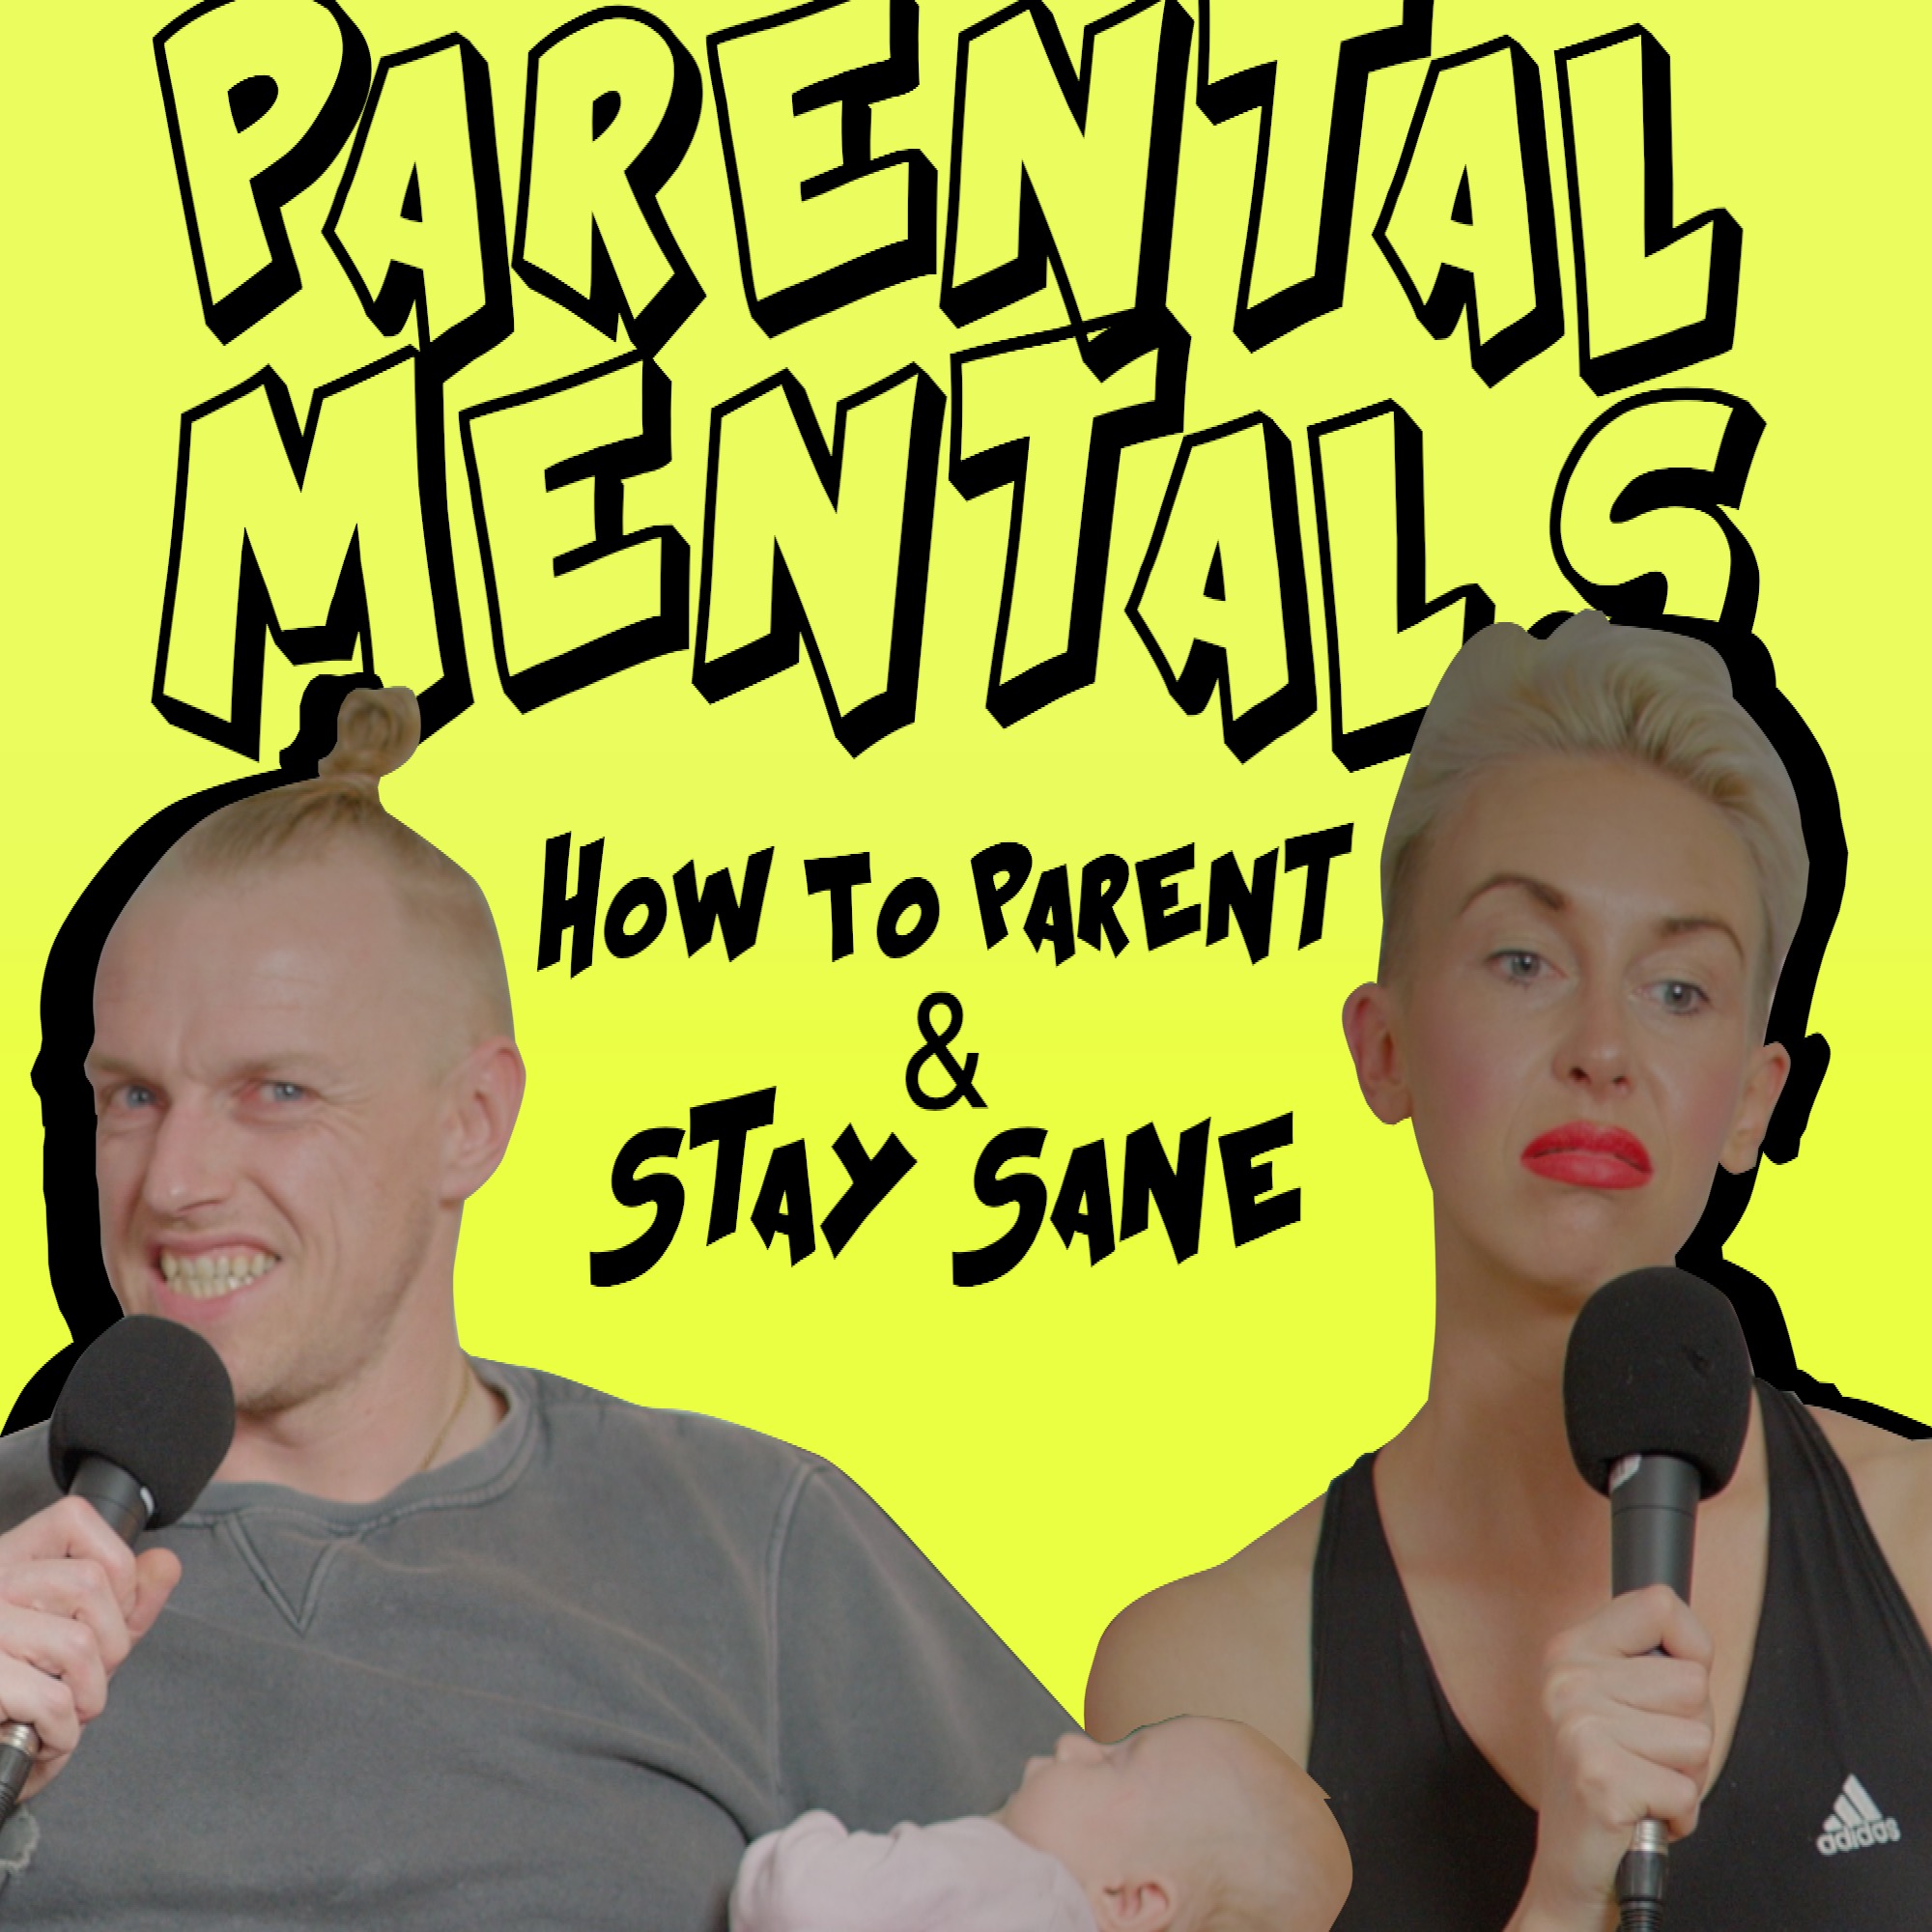 Parental Mentals - Episode 1 - How to 'Family' (pt1)